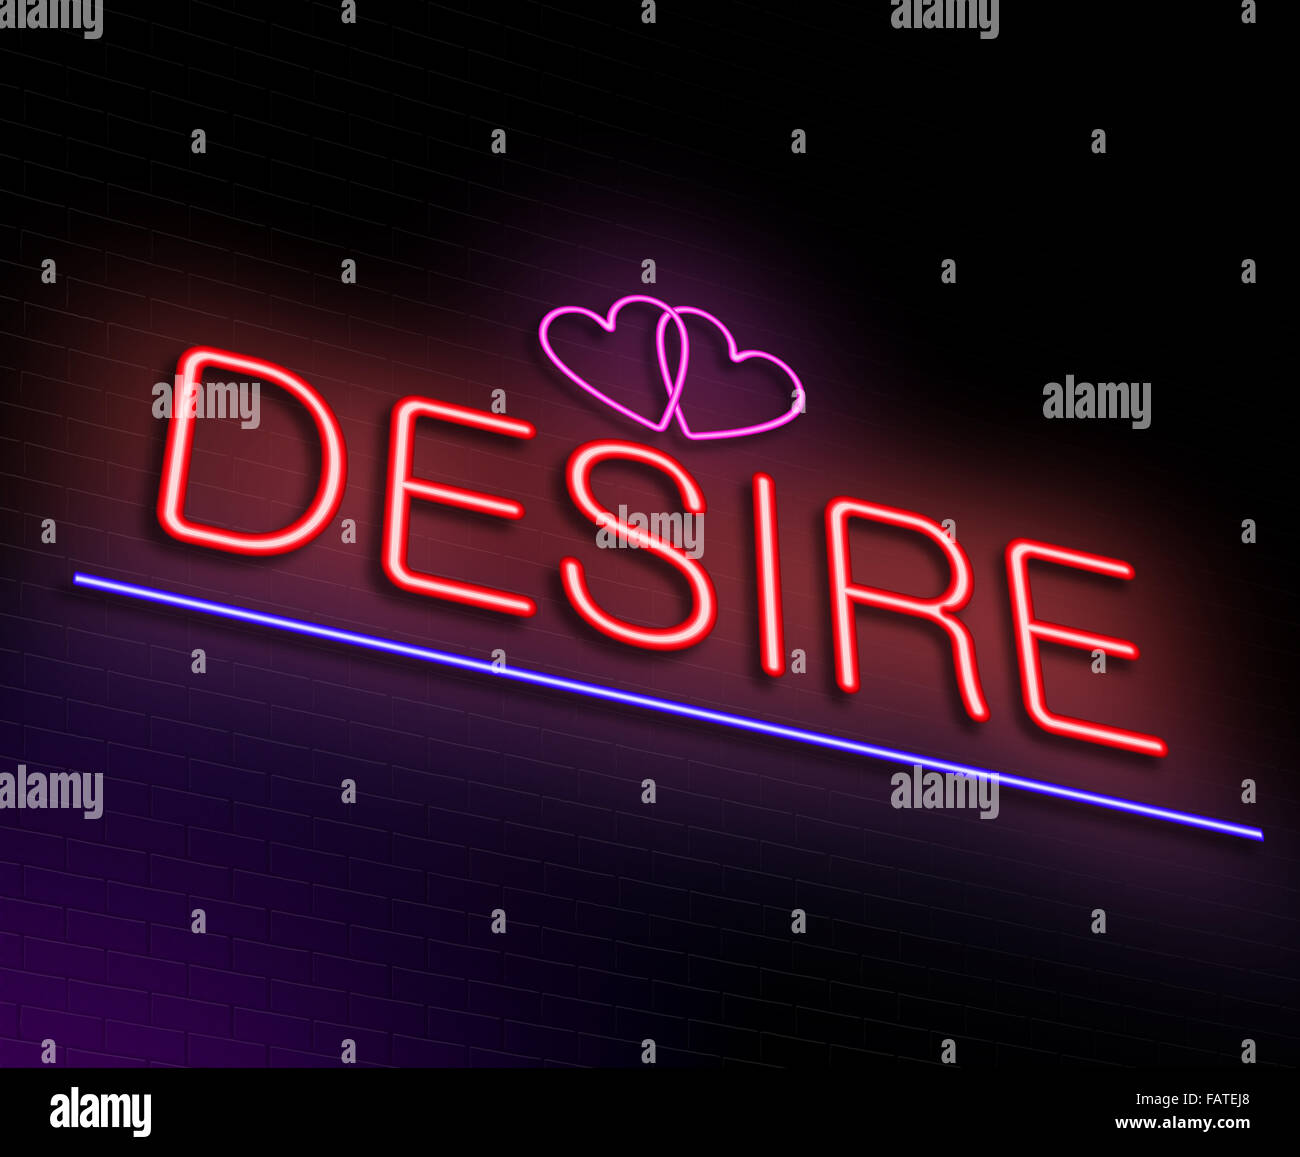 Desire concept. Stock Photo